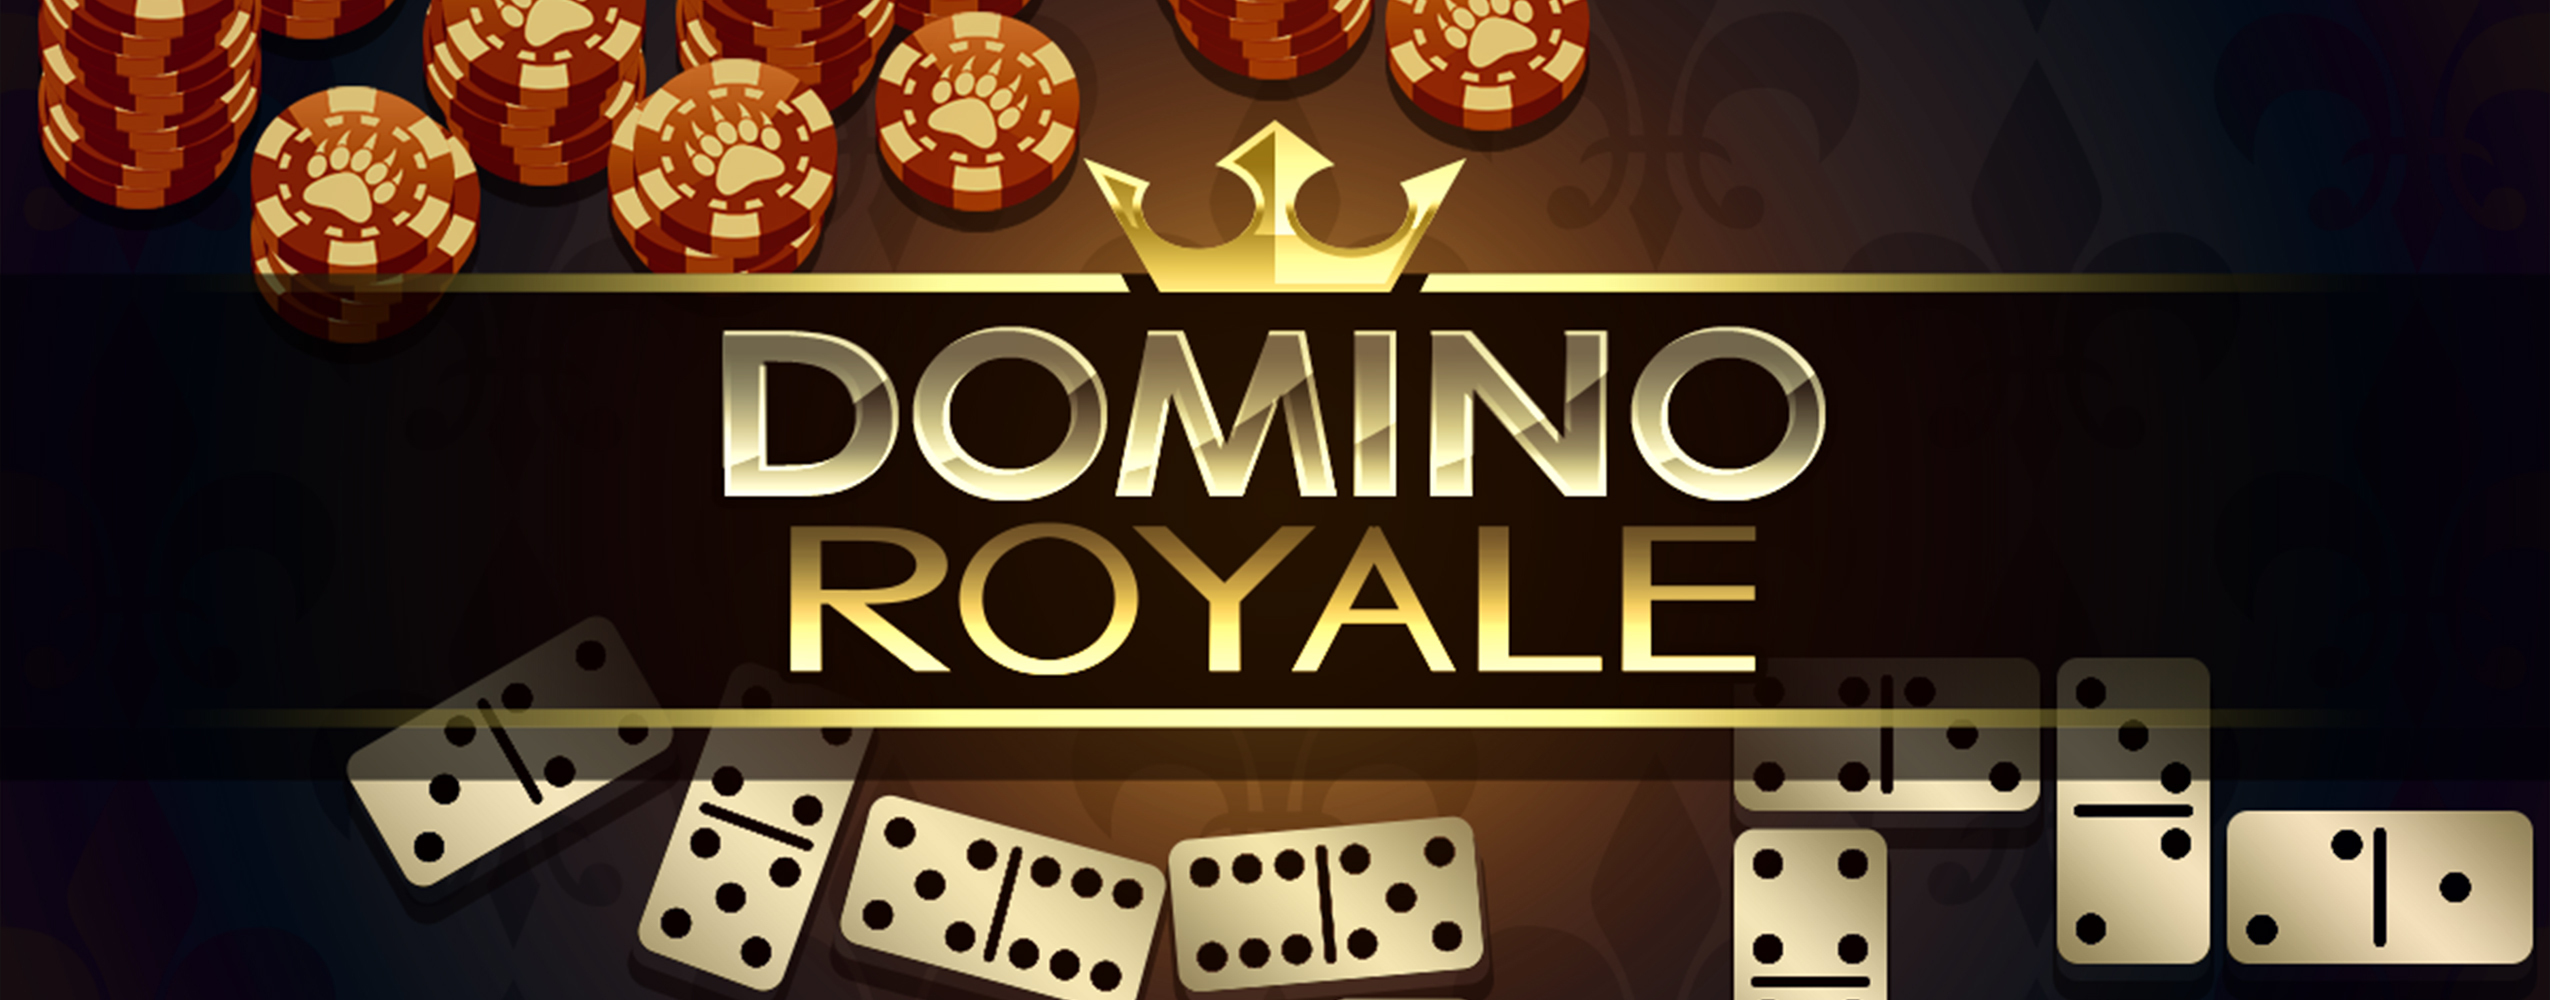 Domino Royale!